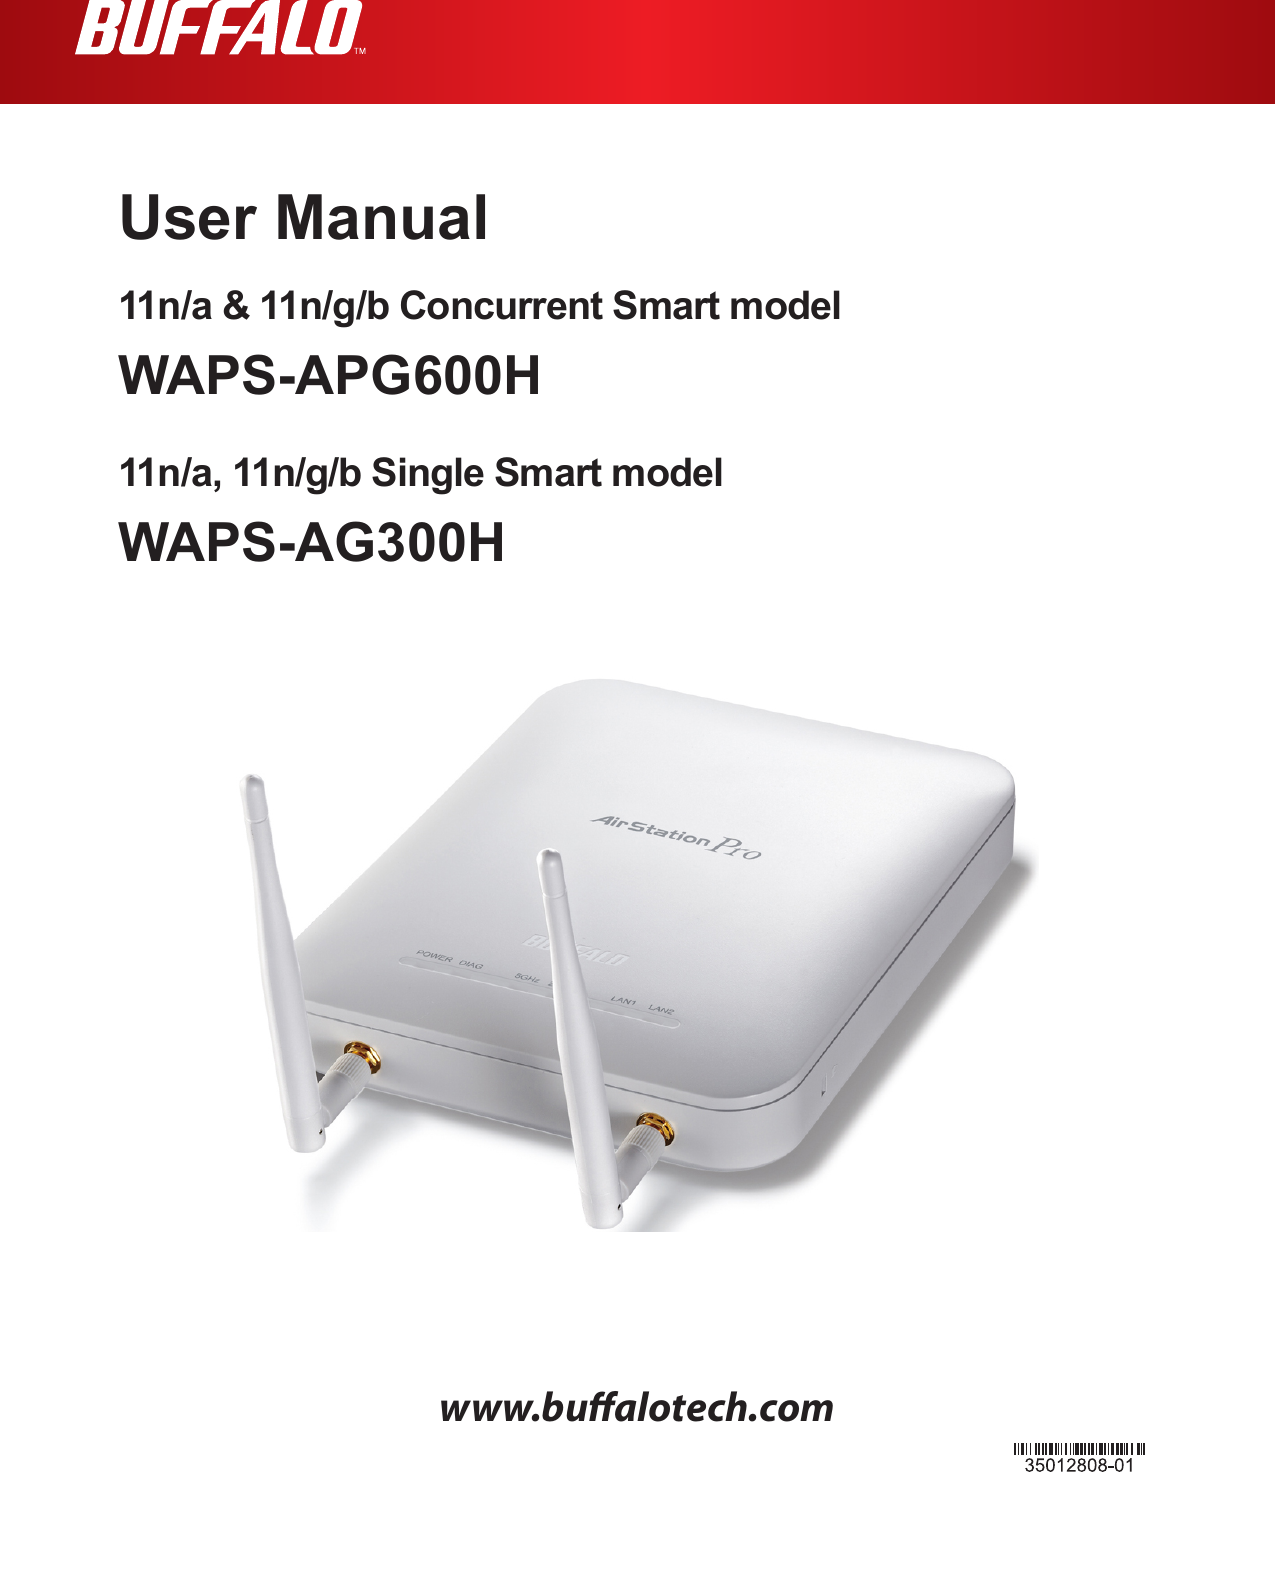 www.bualotech.comUser Manual11n/a &amp; 11n/g/b Concurrent Smart modelWAPS-APG600H11n/a, 11n/g/b Single Smart modelWAPS-AG300H